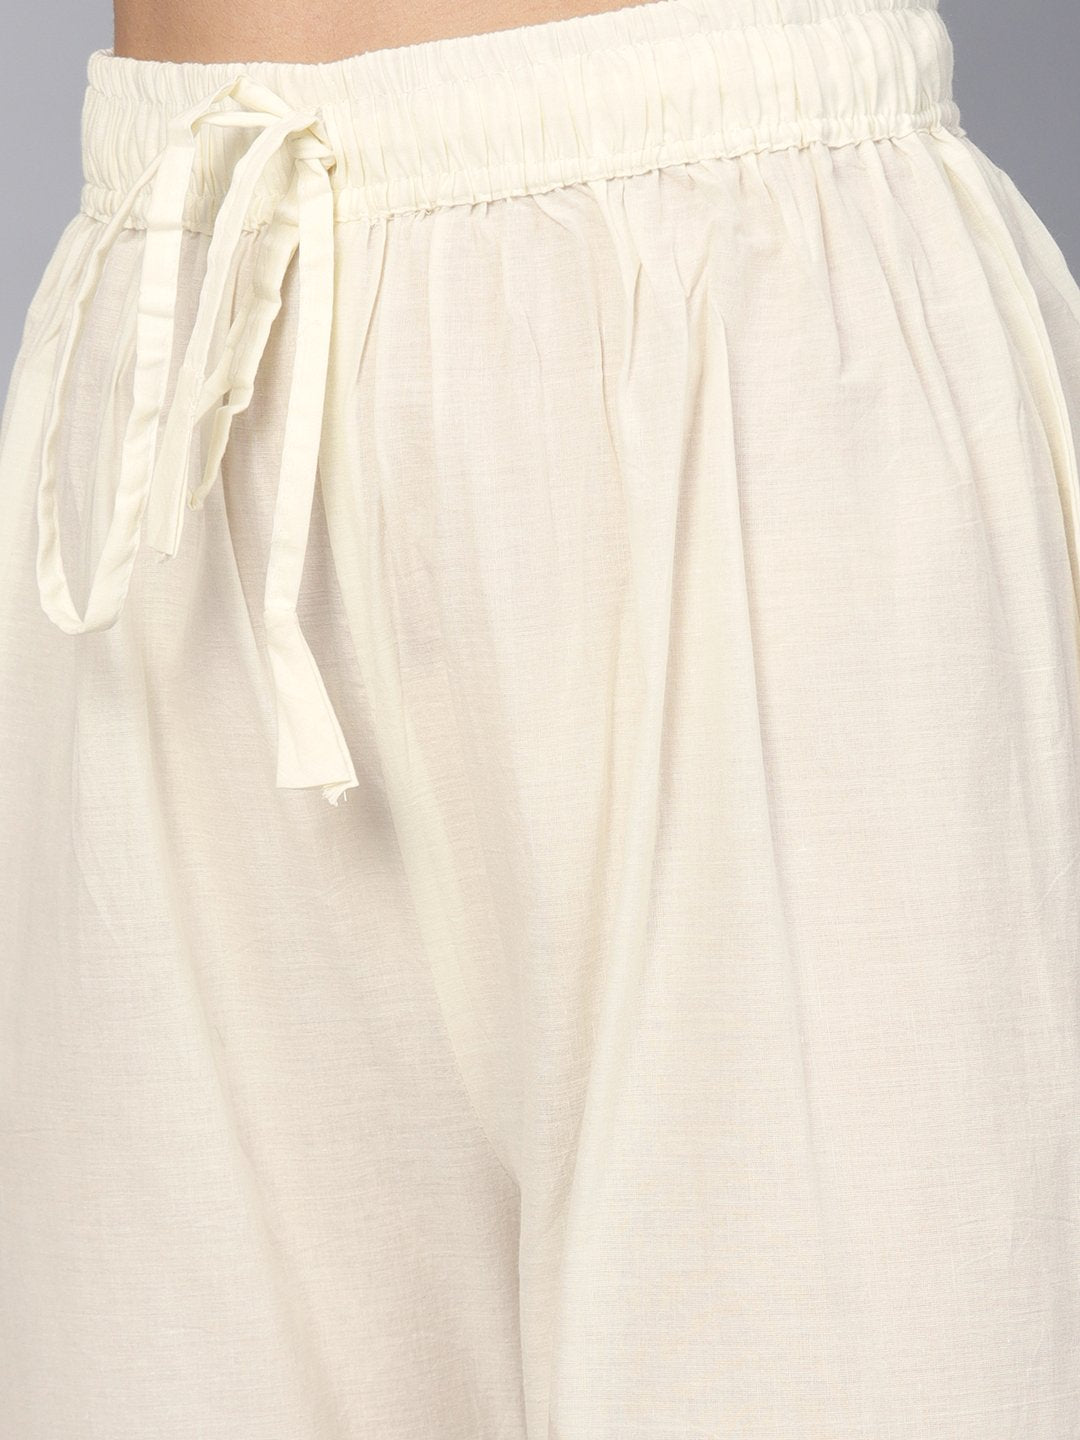 Ishin Women's Cotton Off White Printed A-Line Kurta Palazzo Dupatta Set